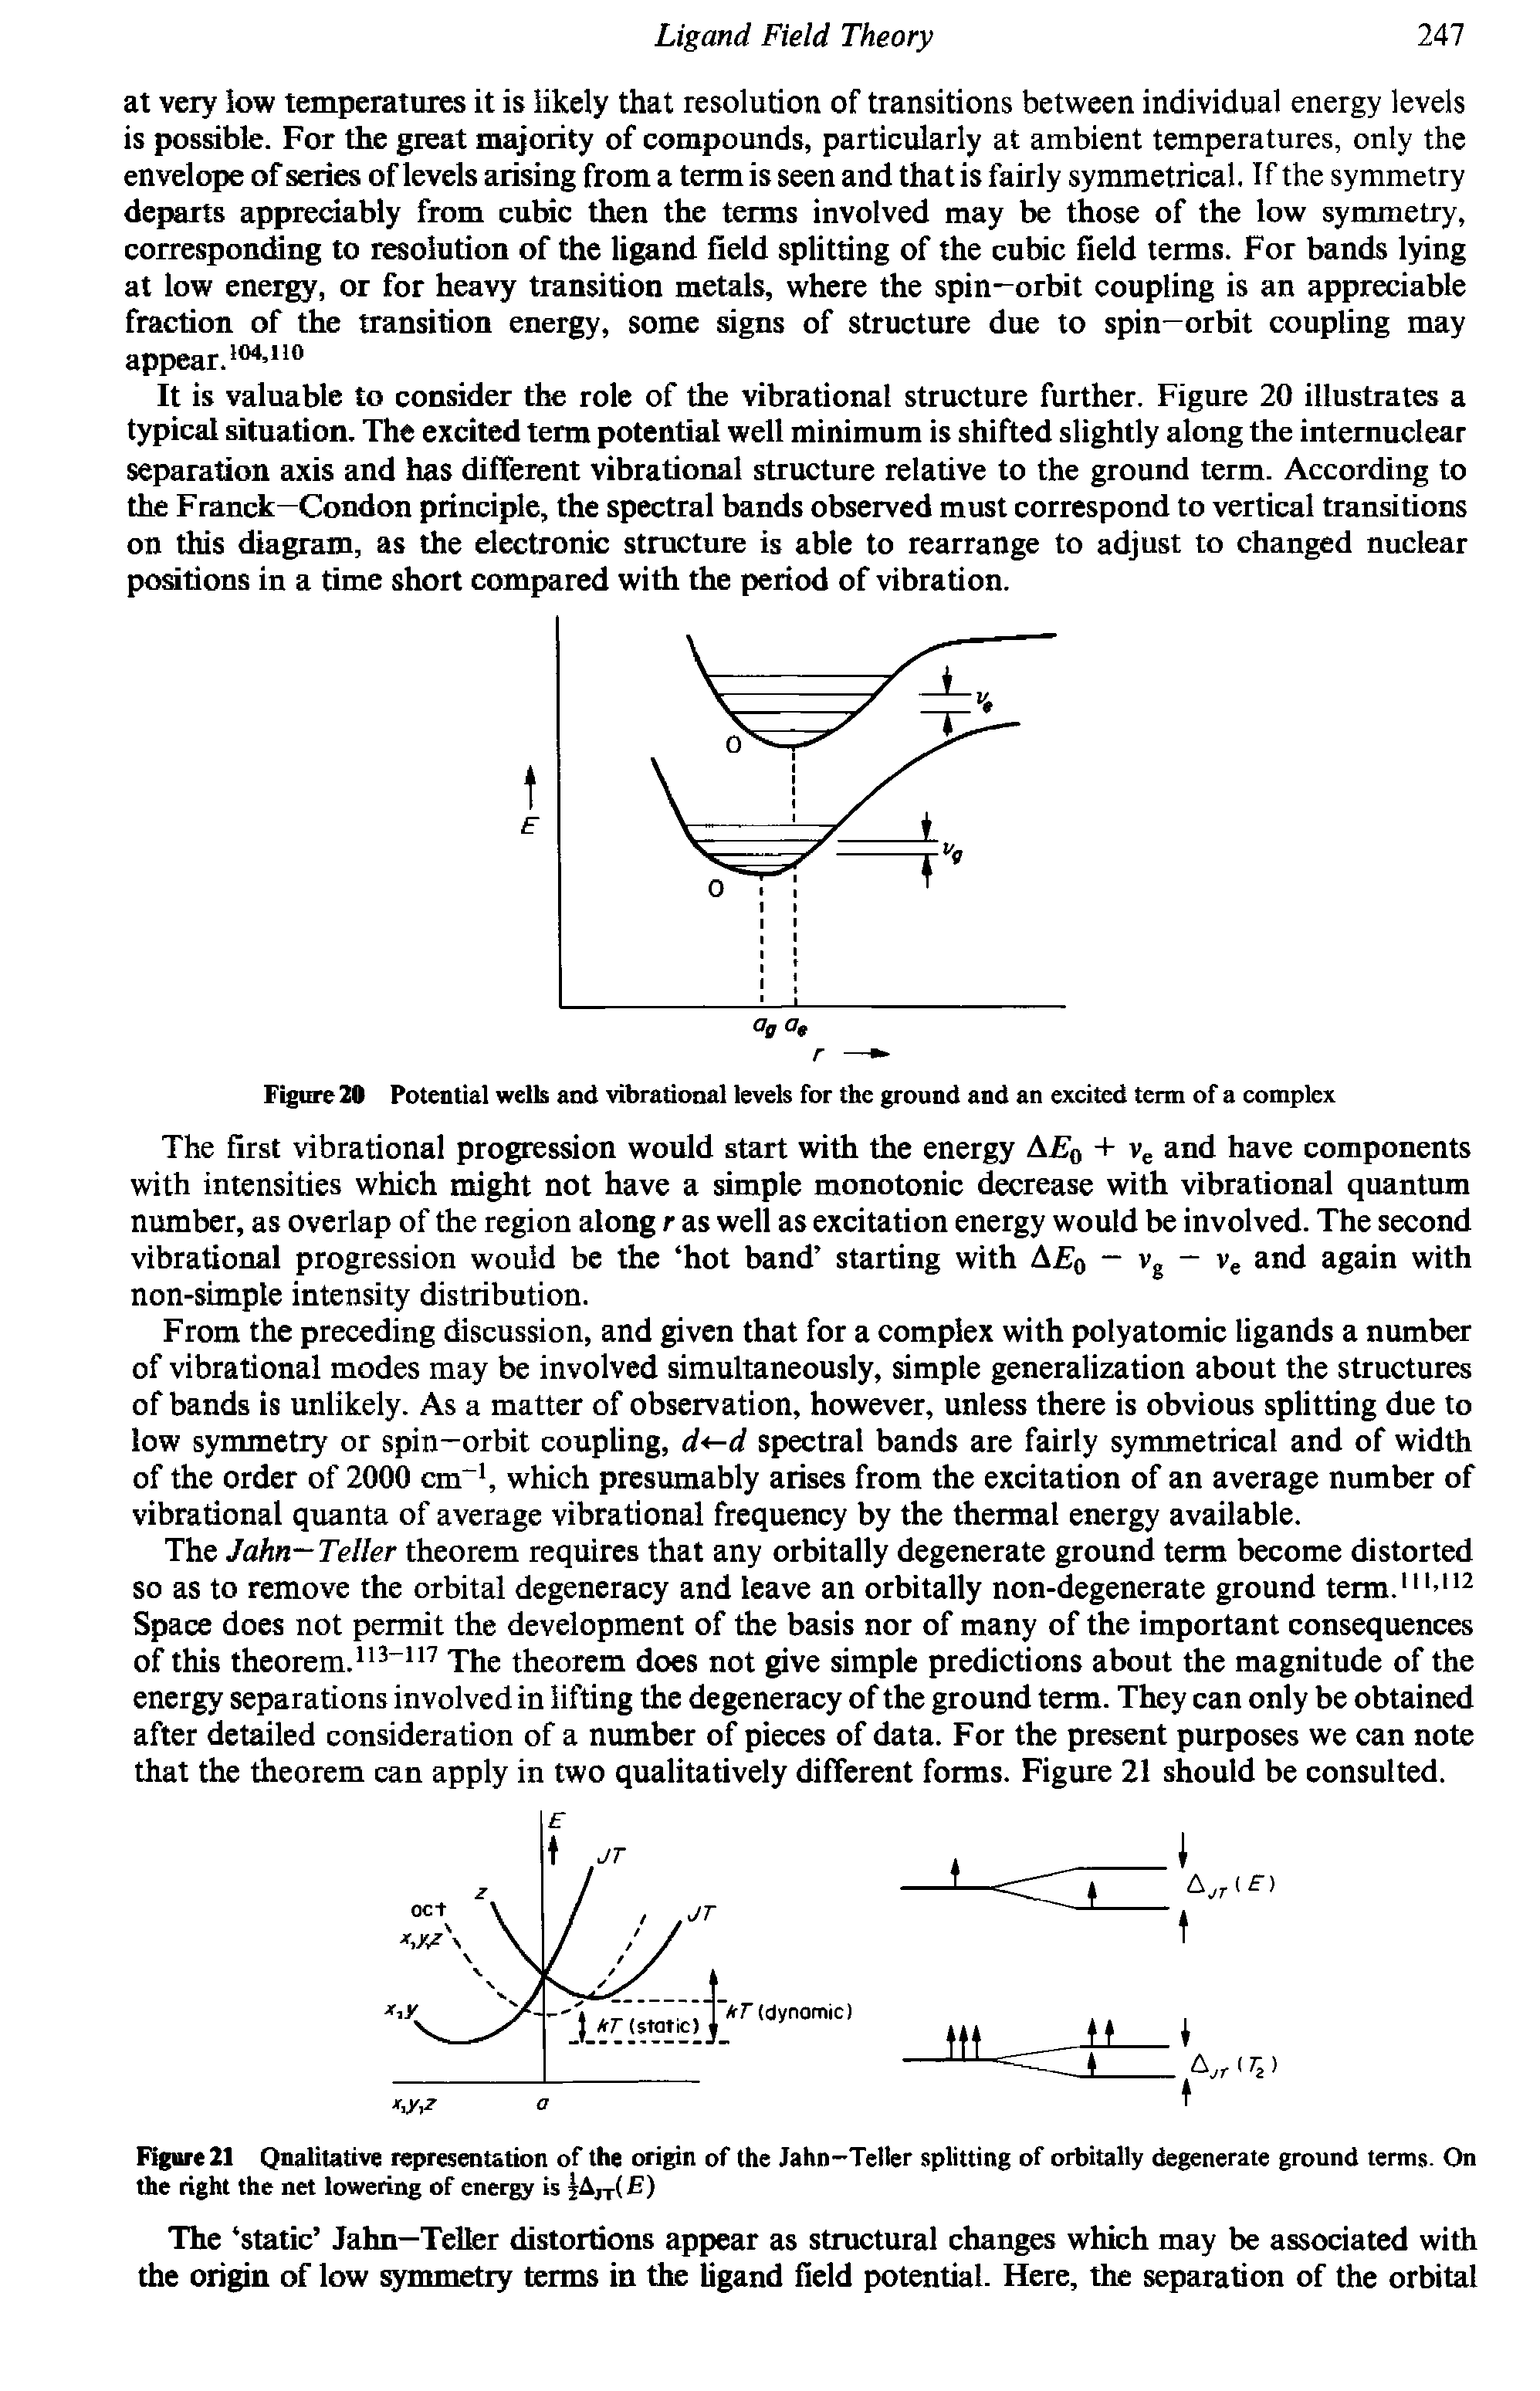 Figure 21 Qualitative representation of the origin of the Jahn-Teller splitting of orbitally degenerate ground terms. On the right the net lowering of energy is jAJT( E)...